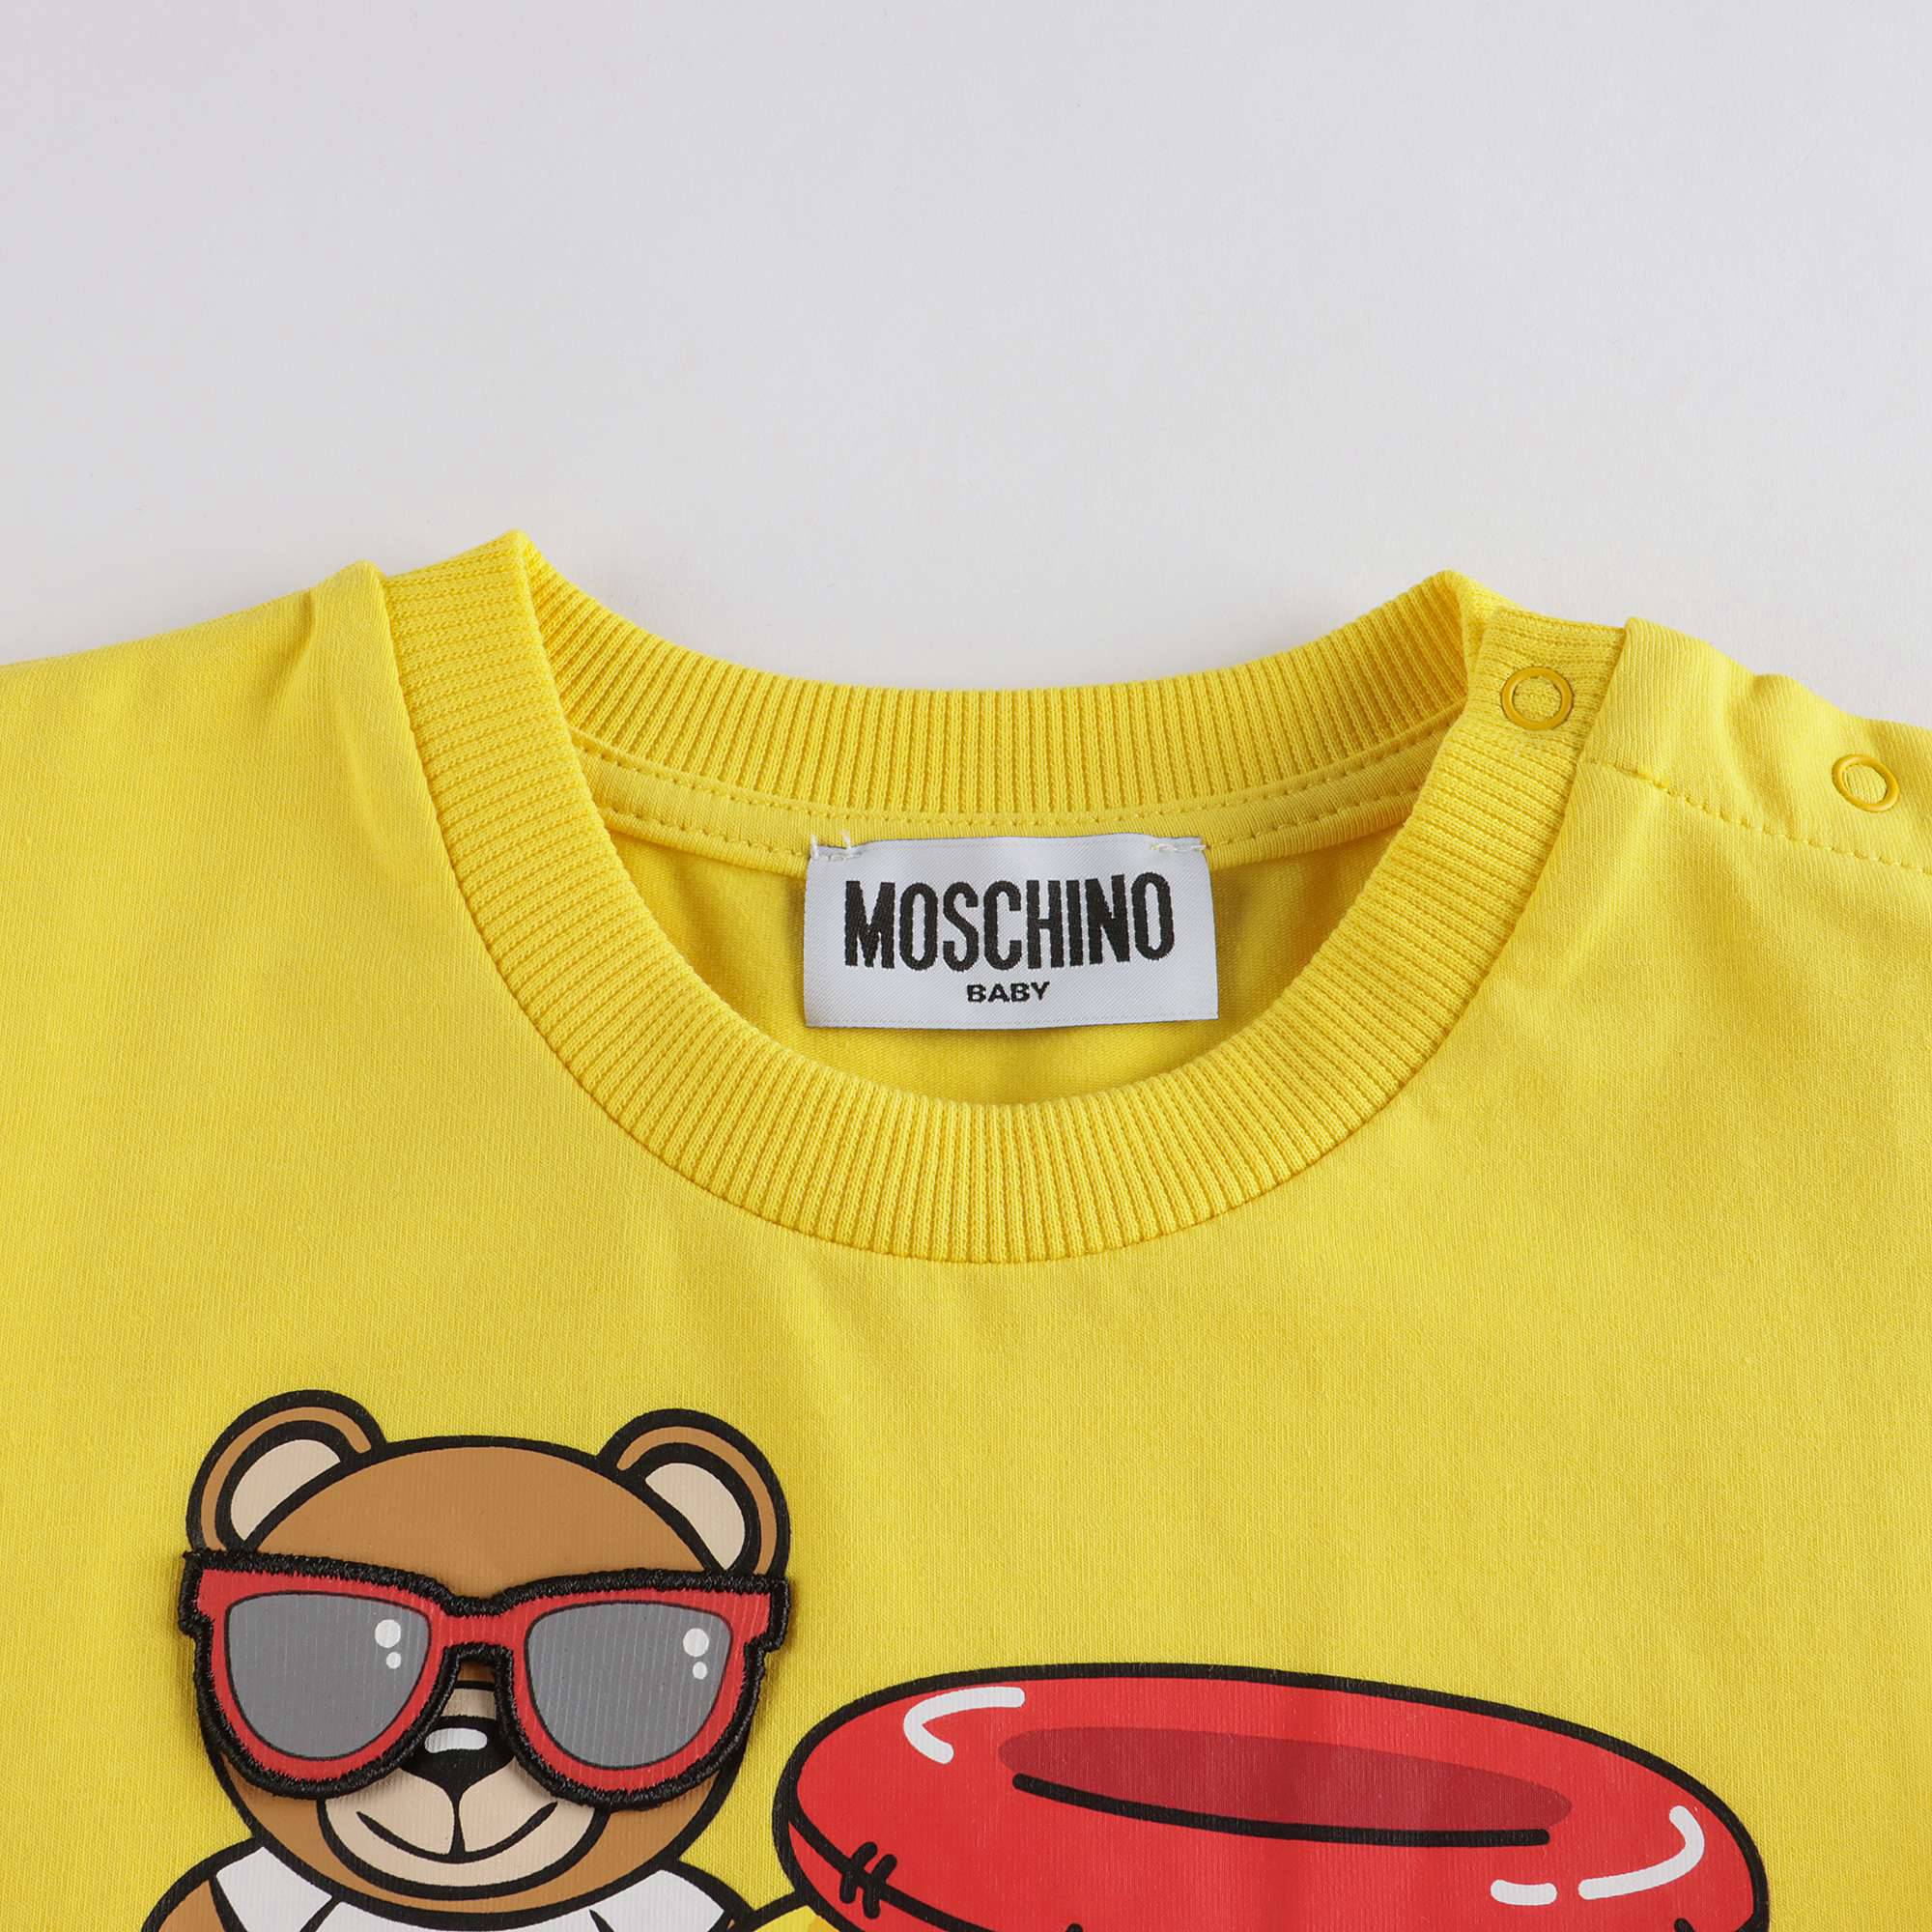 Baby Boys & Girls Yellow Bear Cotton T-Shirt